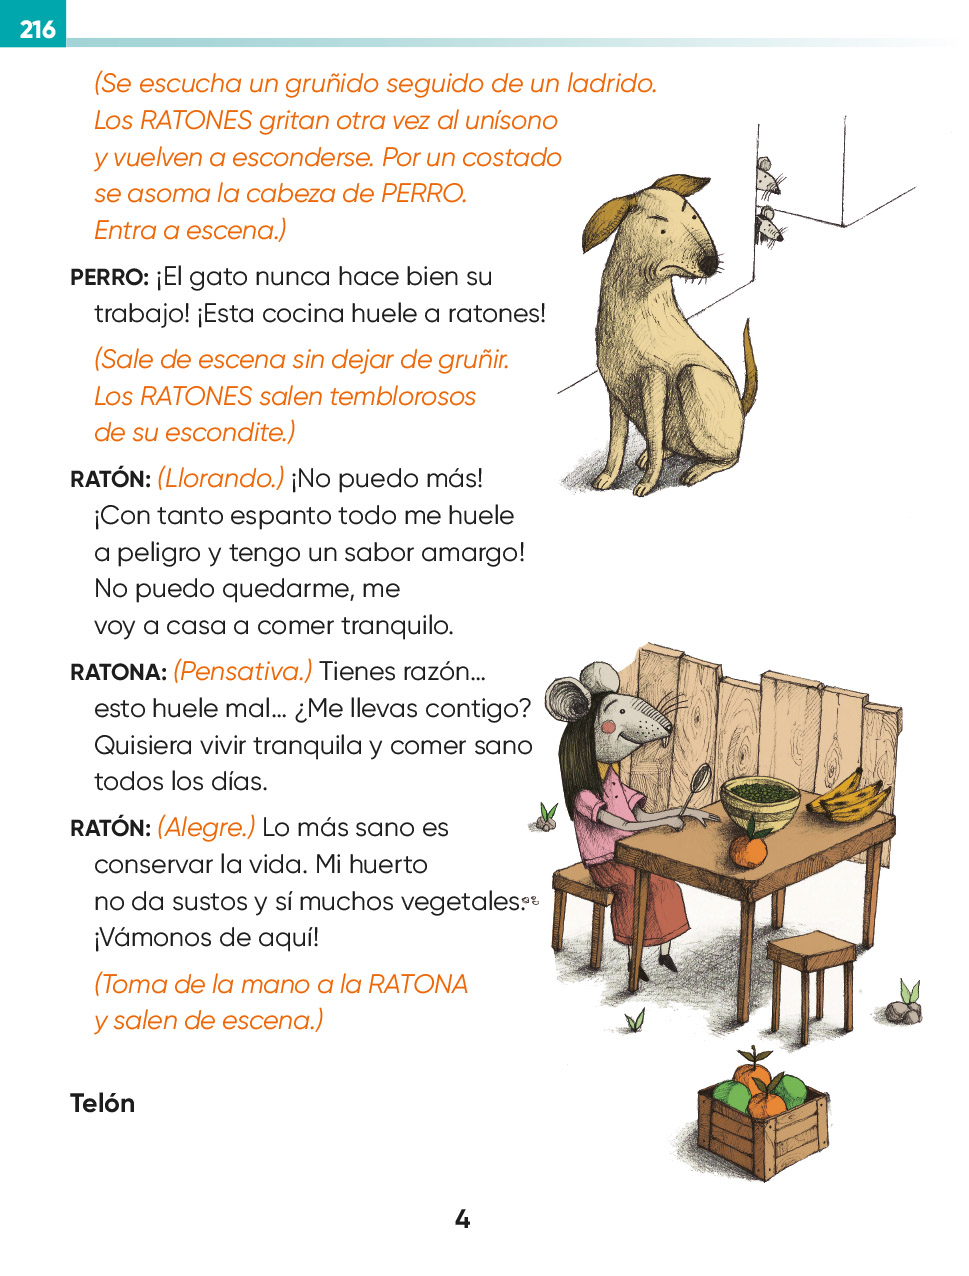 Lengua Materna Español Segundo Grado 2020 2021 Página 216 De 225 Libros De Texto Online 2914